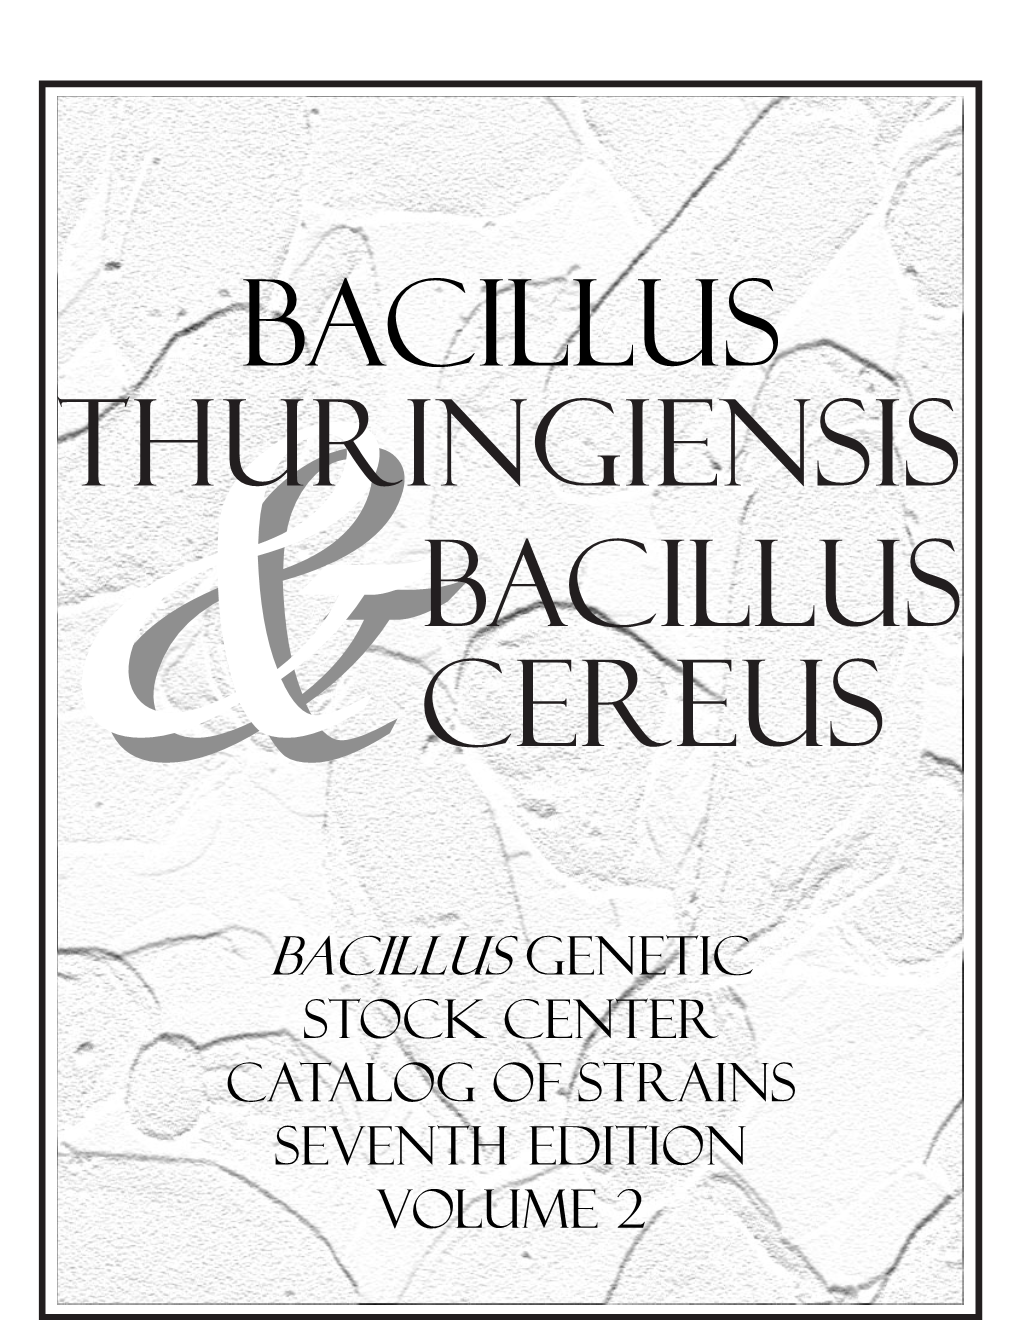 Bacillus Genetic Stock Center Catalog of Strains Seventh Edition Volume 2